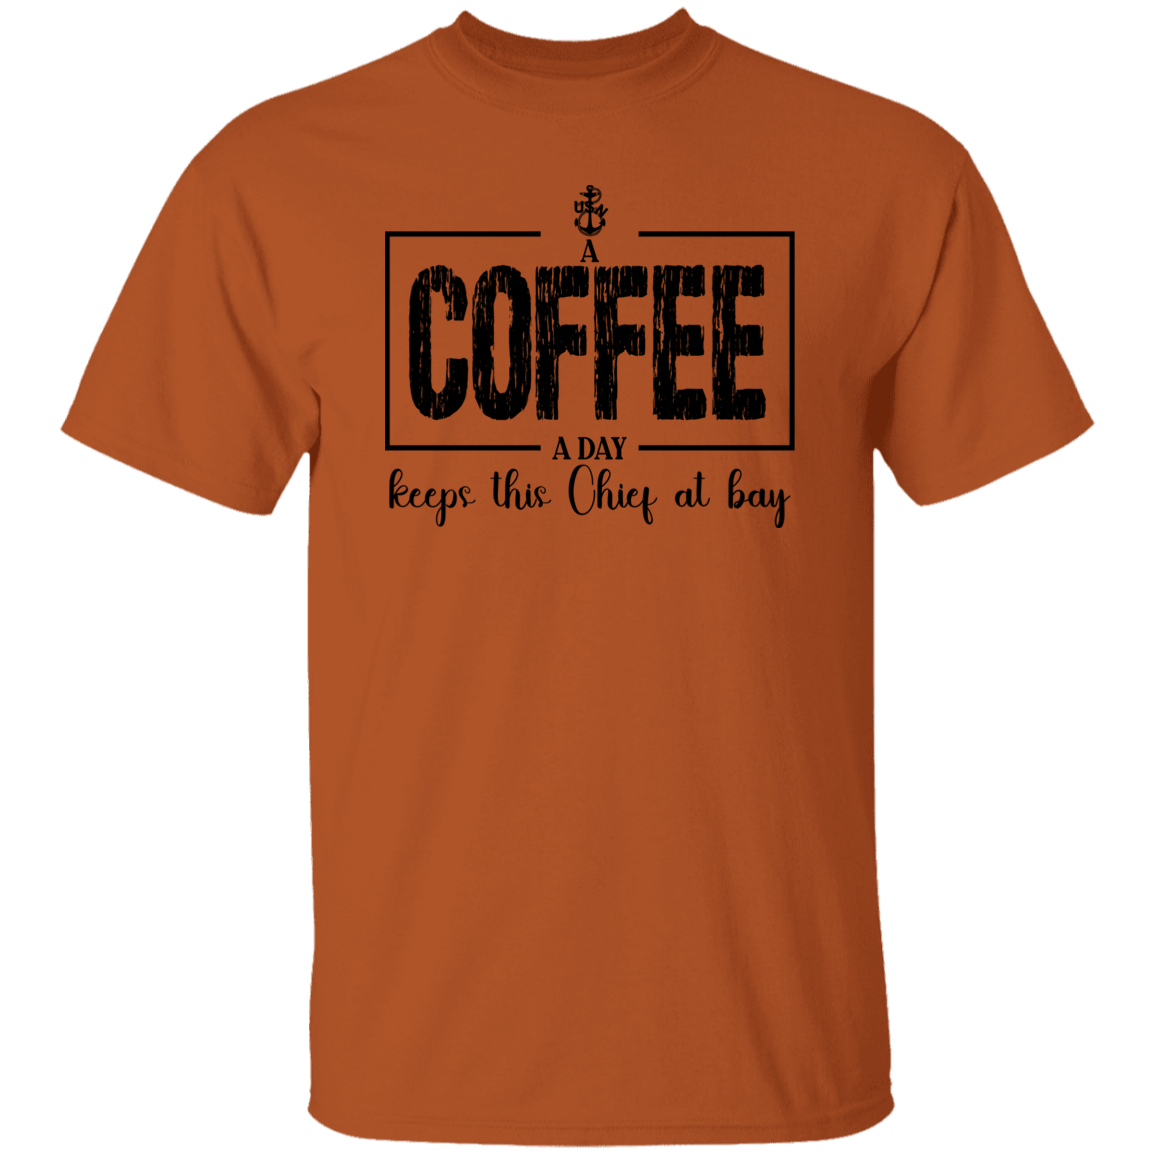 A Coffee a Day 5.3 oz. T-Shirt